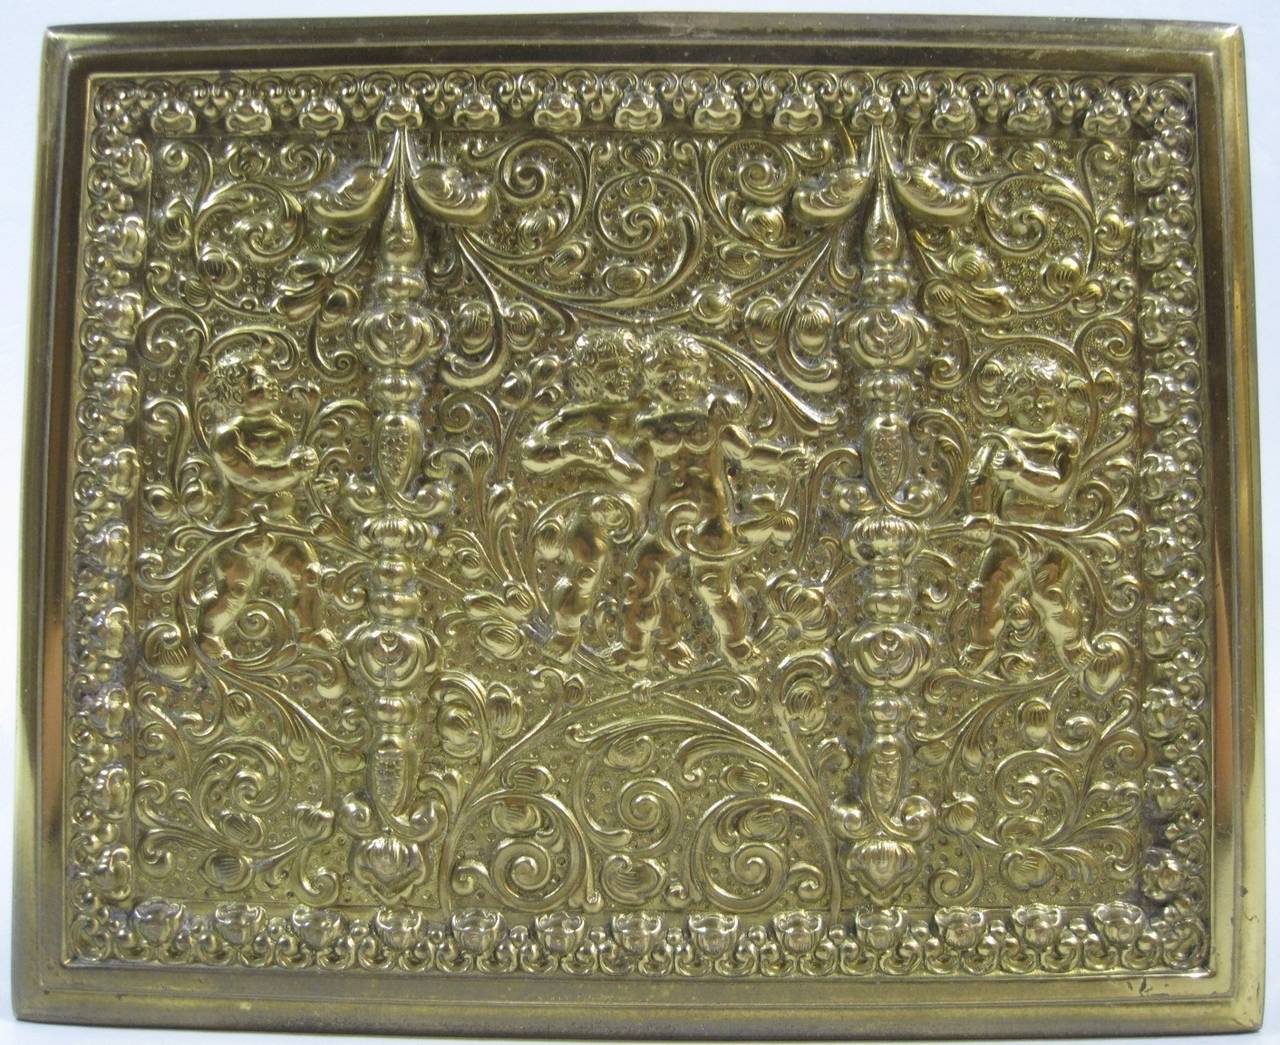 brass jewellery box